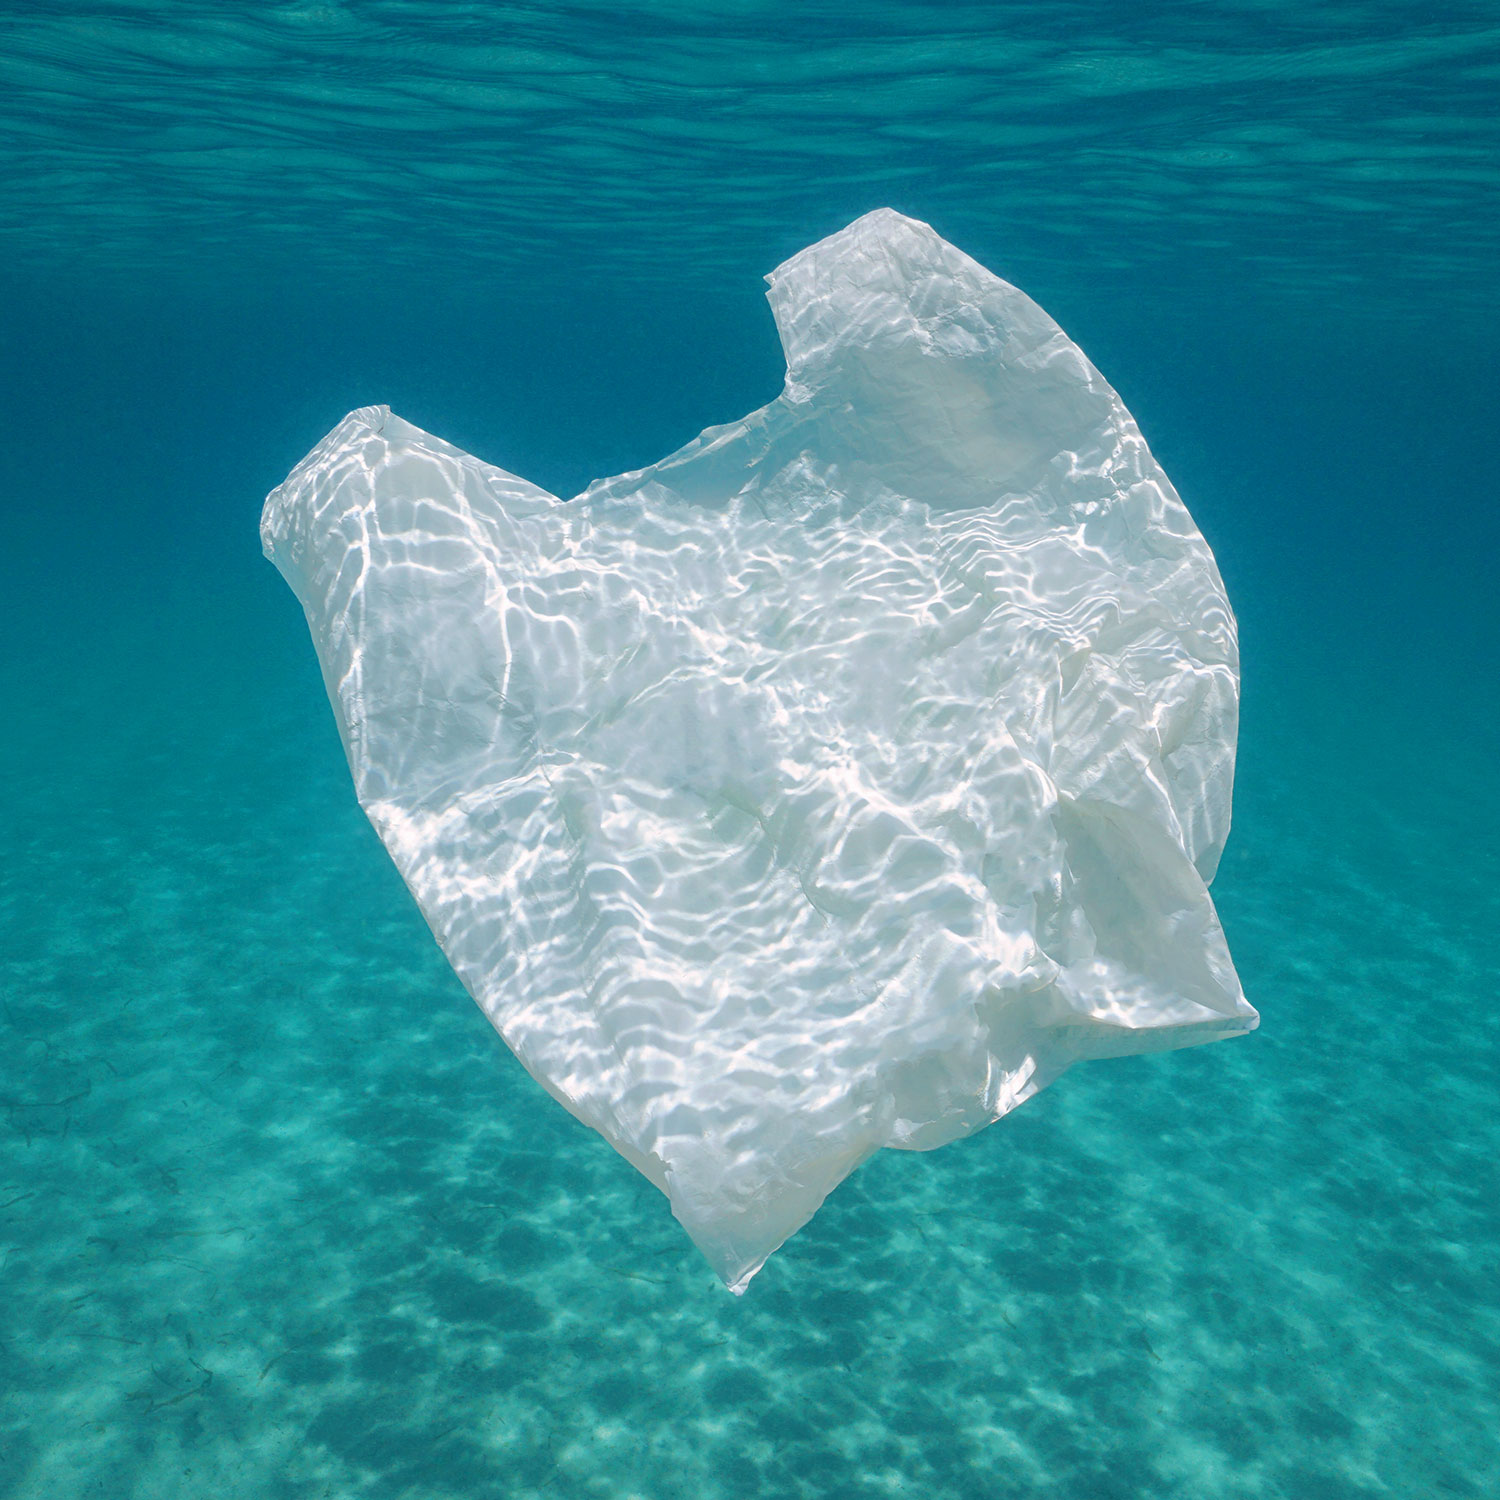 Image of single-use plastic bag